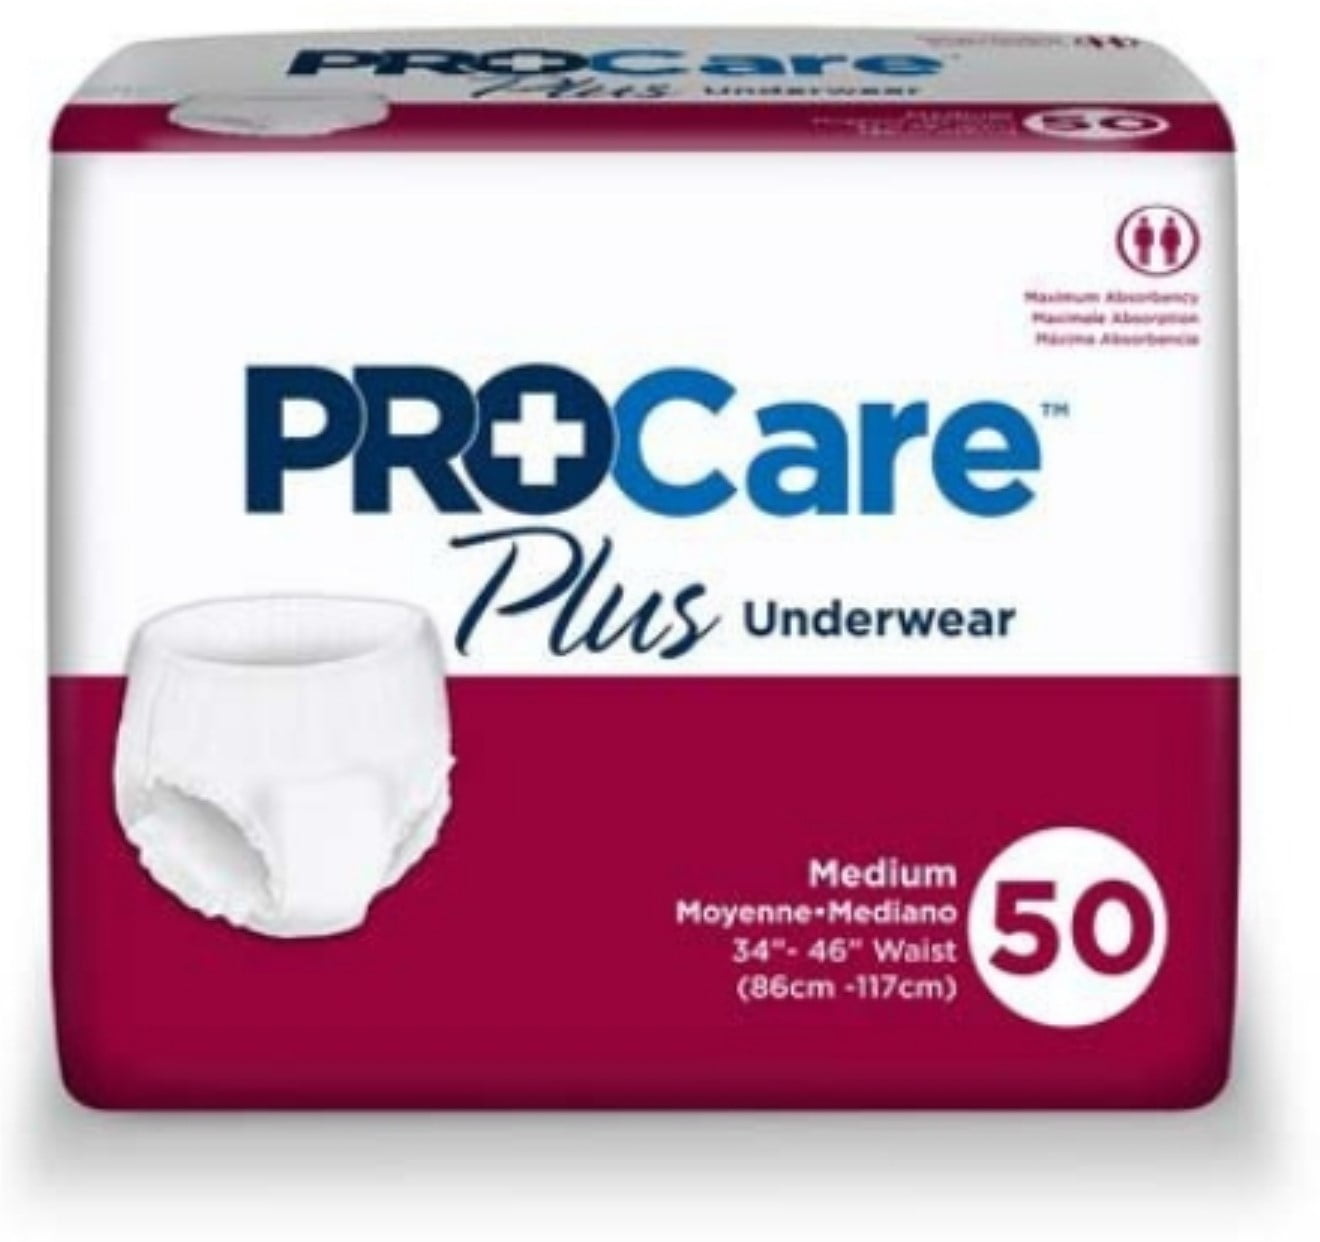 ProCare Protective Underwear, Medium 34 To 46 Inches - 